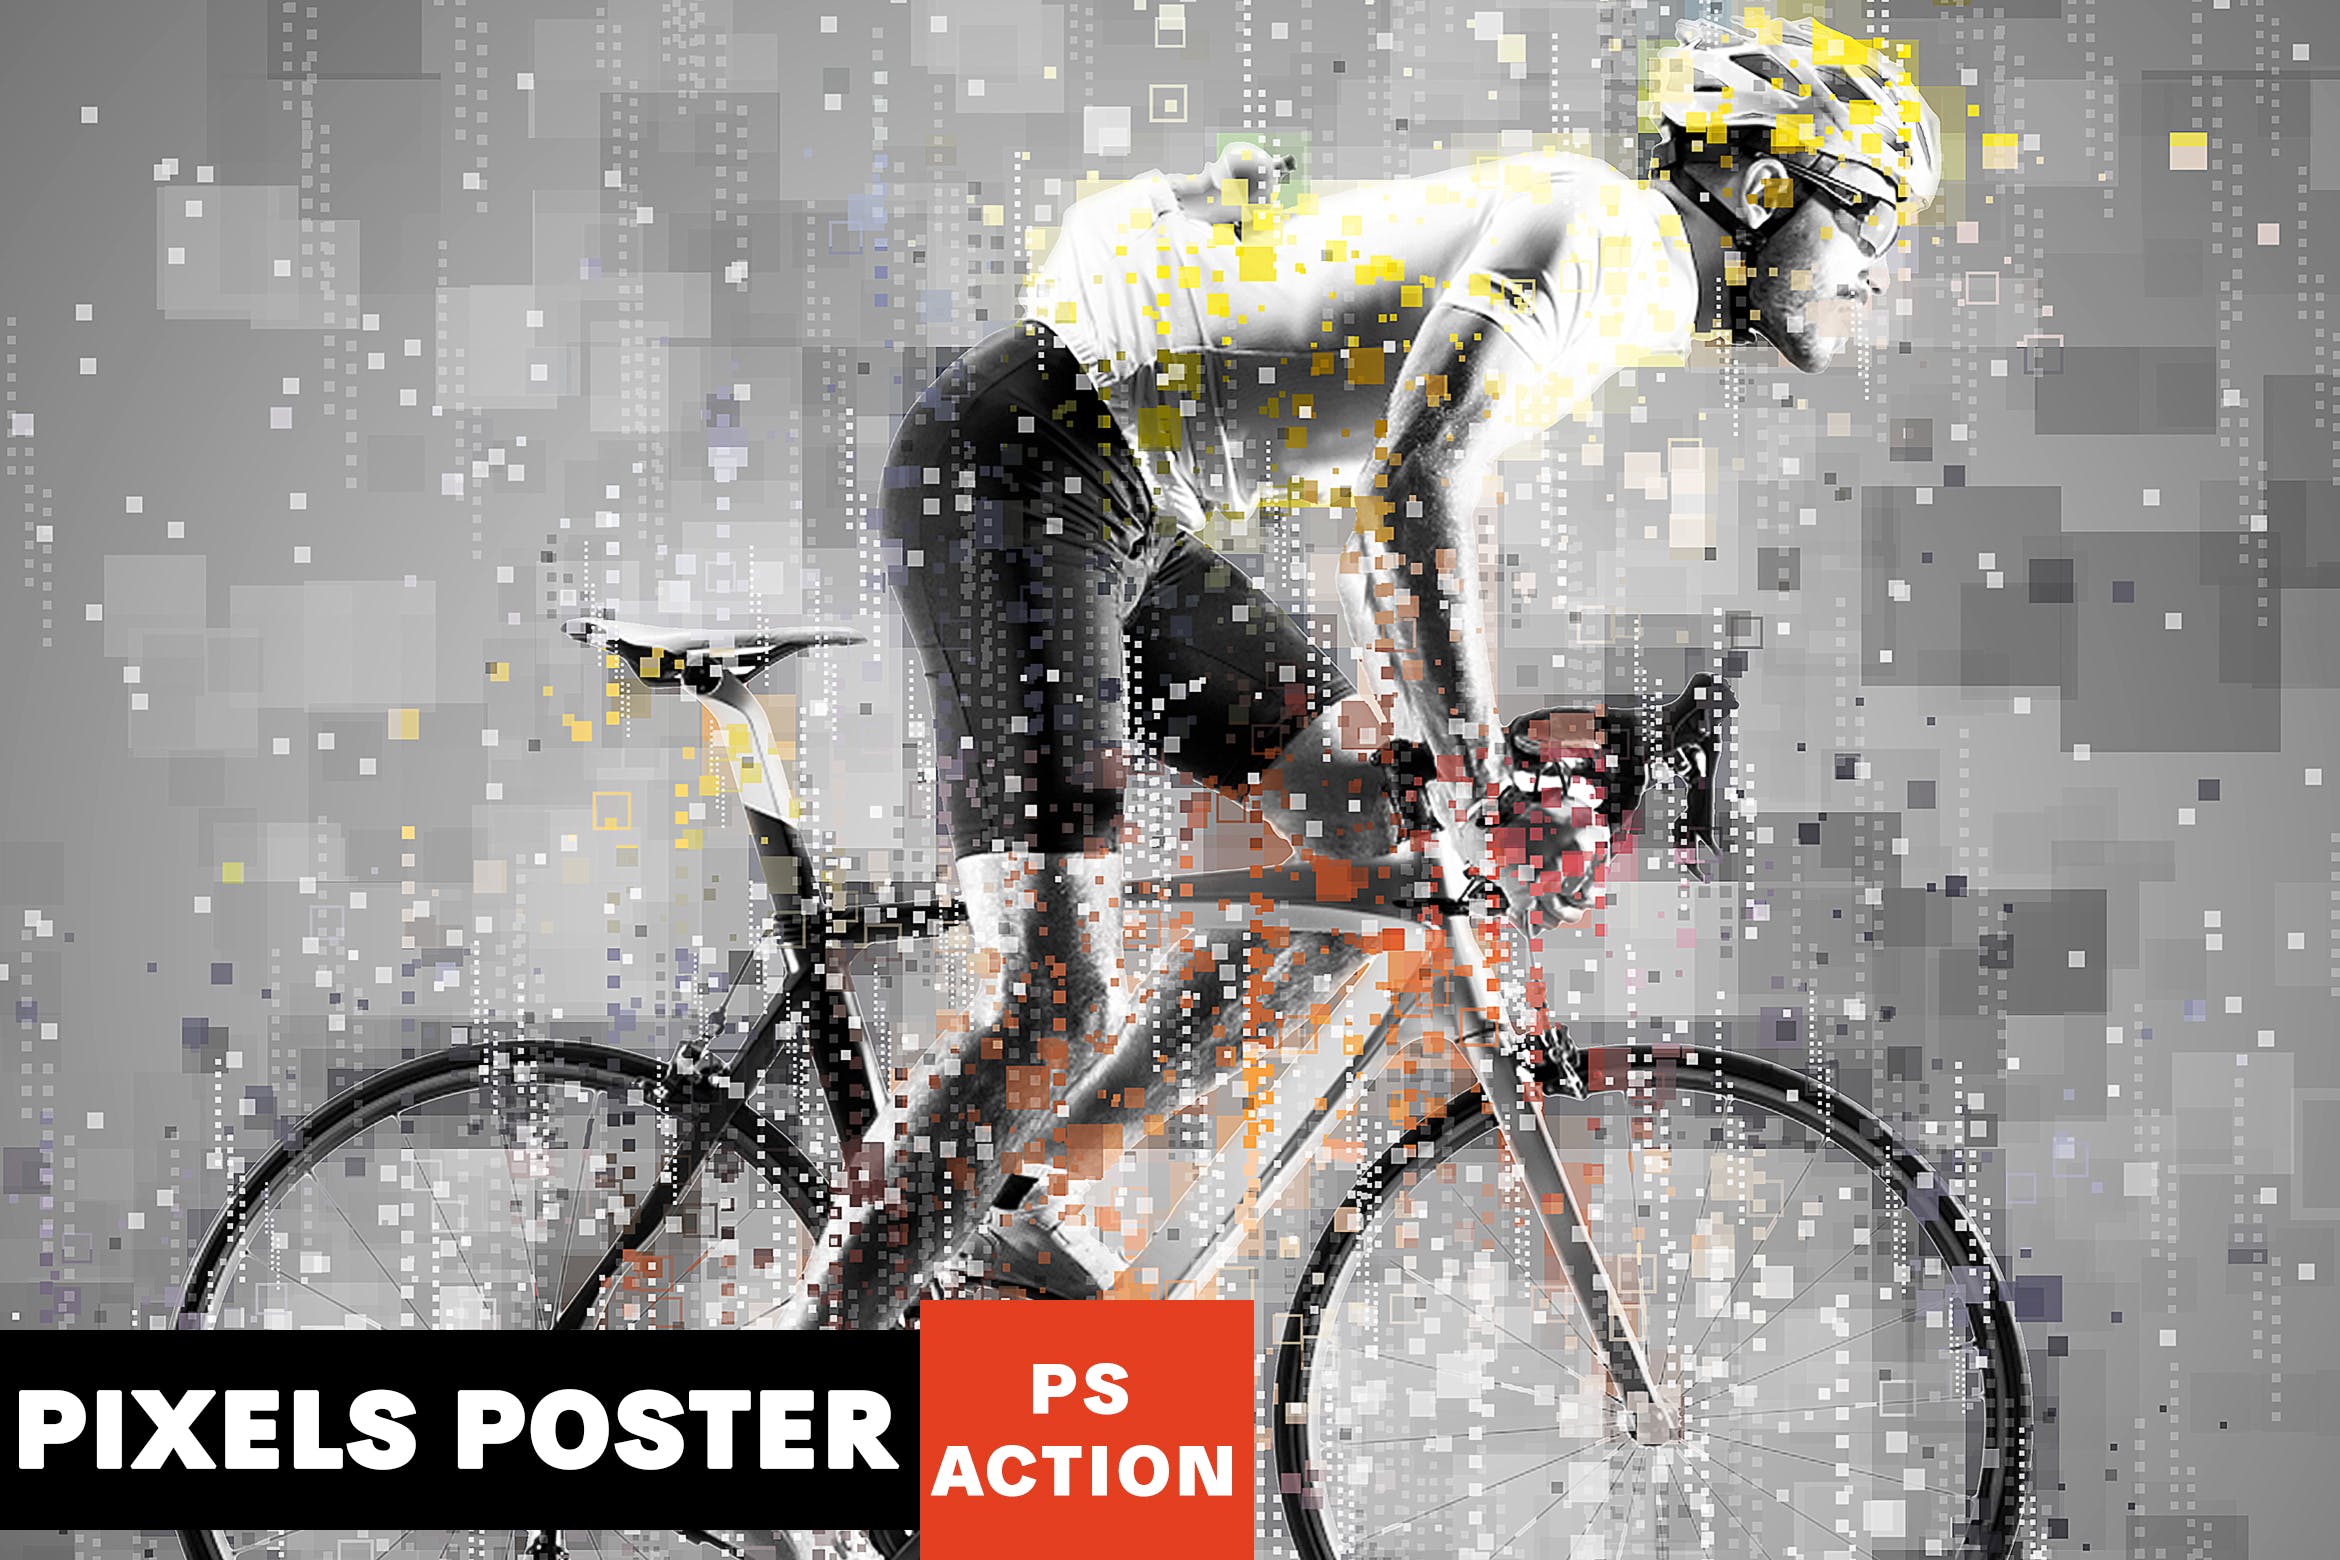 像素艺术海报特效PS动作 Pixels Poster Photoshop Action插图